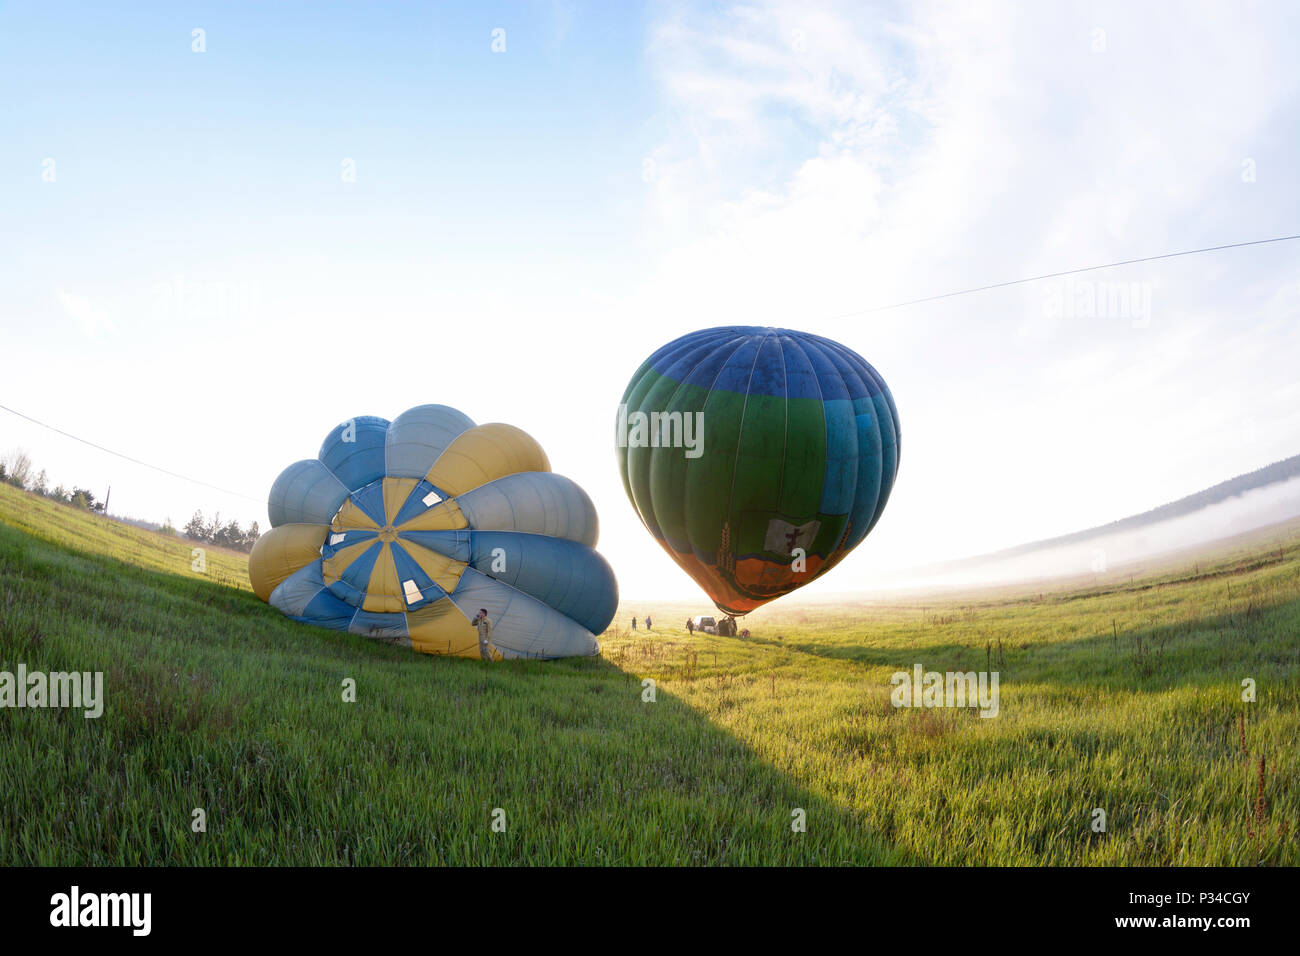 Heißluft-Ballon fertig für den Start, Anhänger mit Ausrüstung ist in der Nähe. Festival der Ballone" Pereiaslav 2018". Mai 6,2018. Pereiaslav, Ukraine Stockfoto